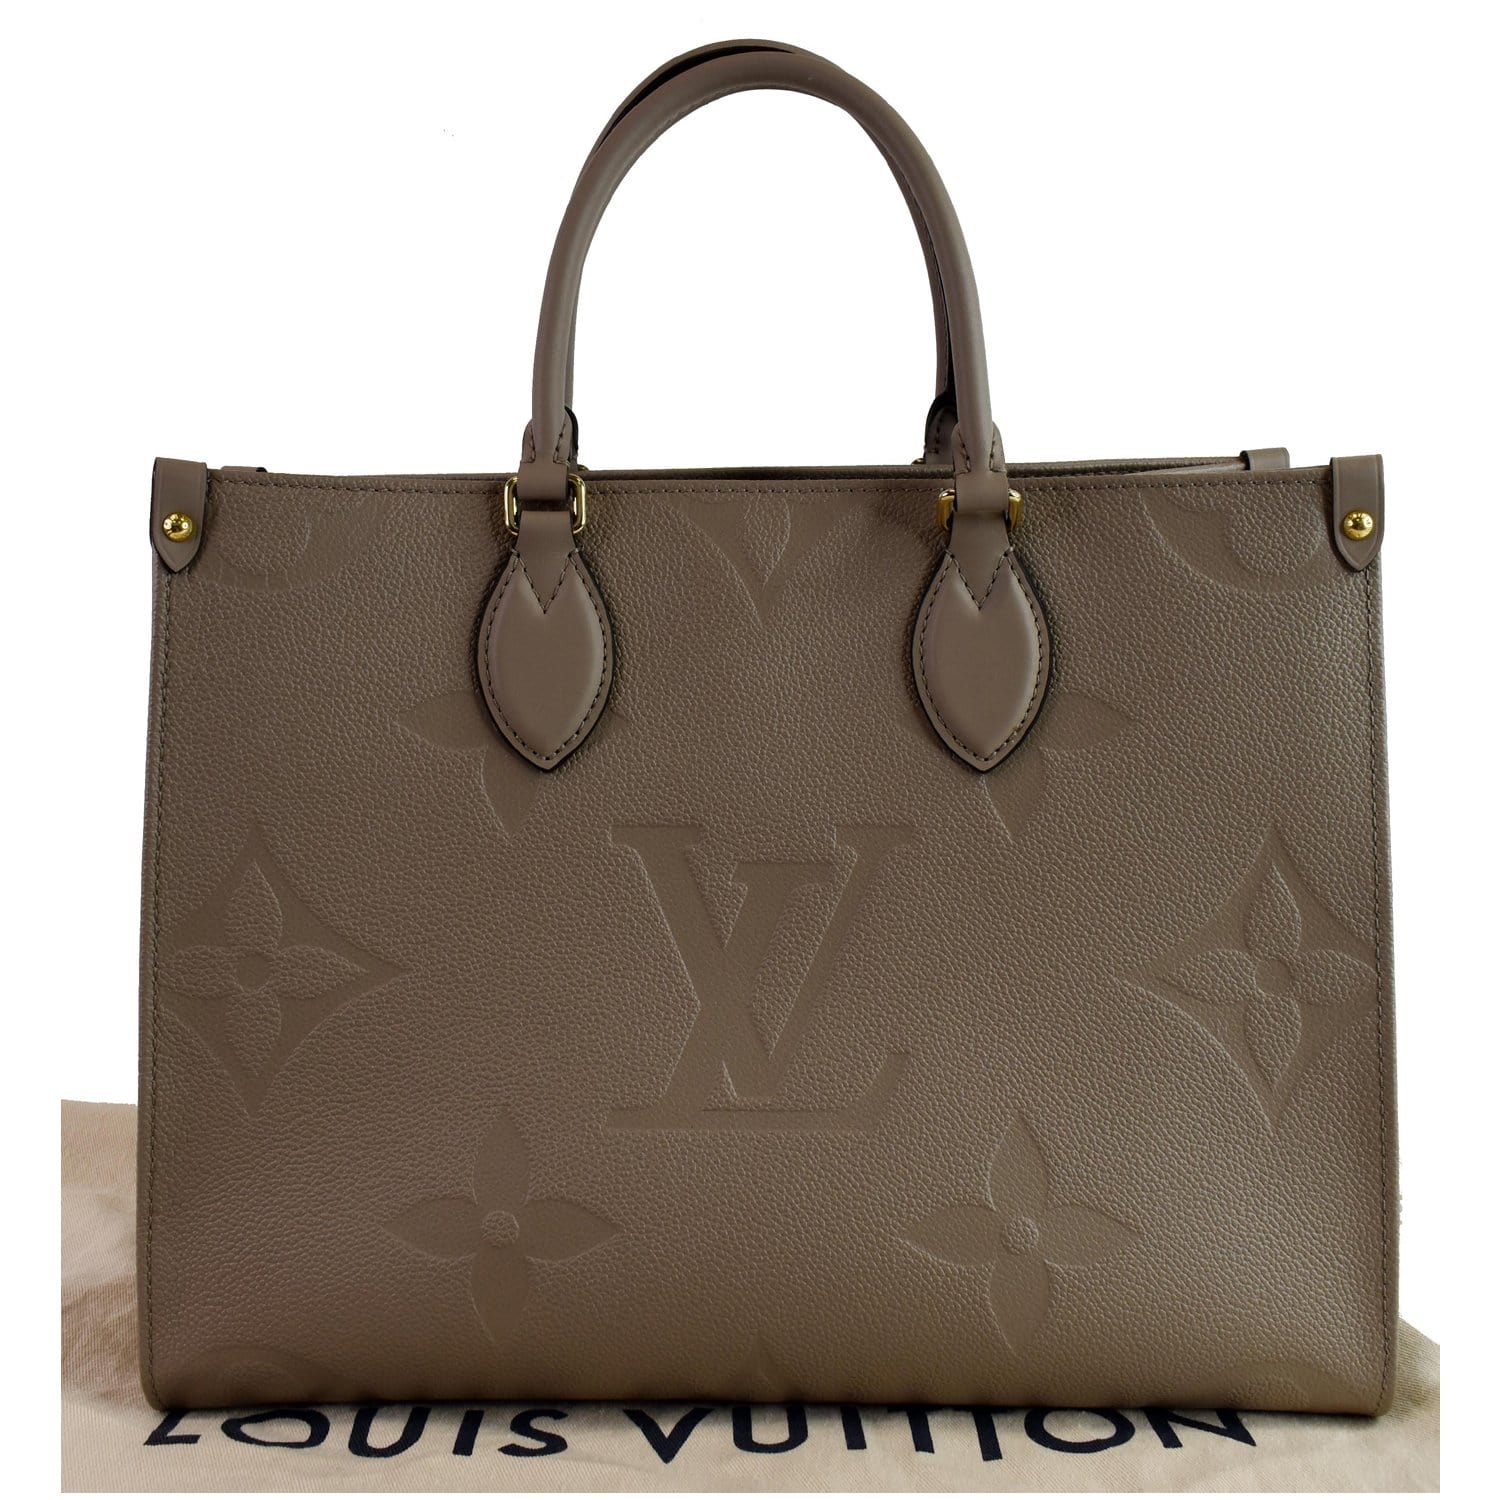 Louis Vuitton OnTheGo (OTG) MM Empreinte Monogram Tourterelle